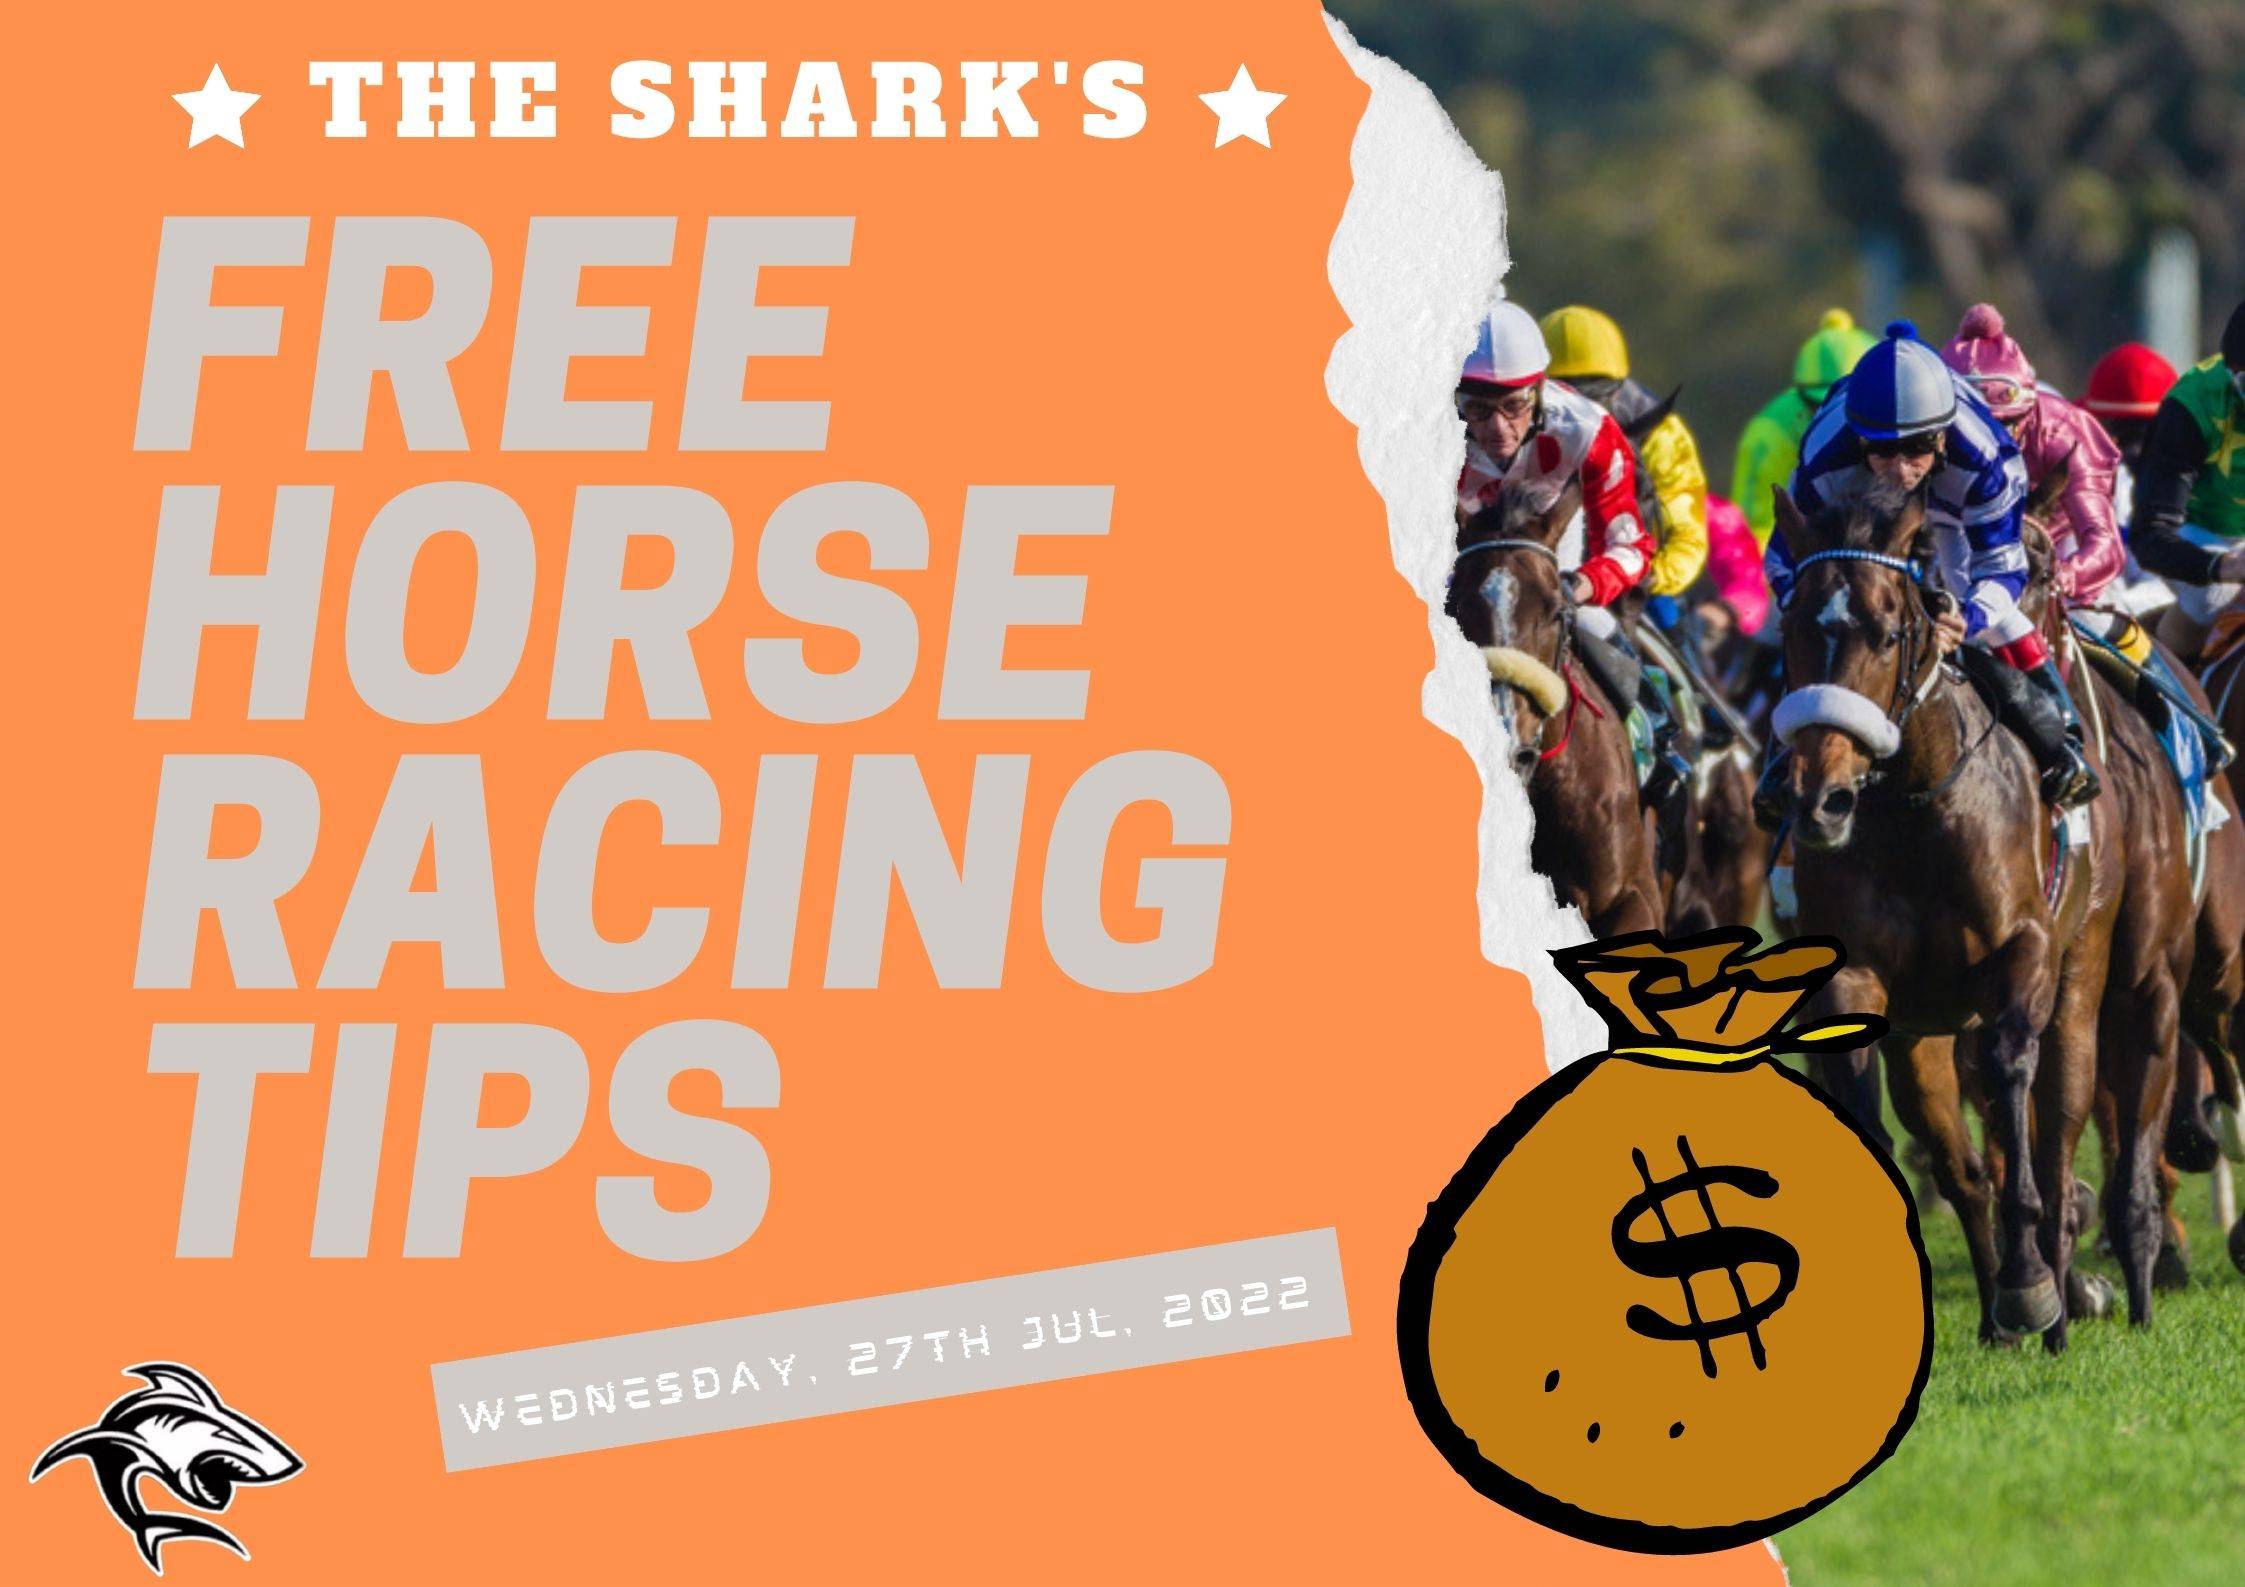 Free Horse Racing Tips - 27th Jul